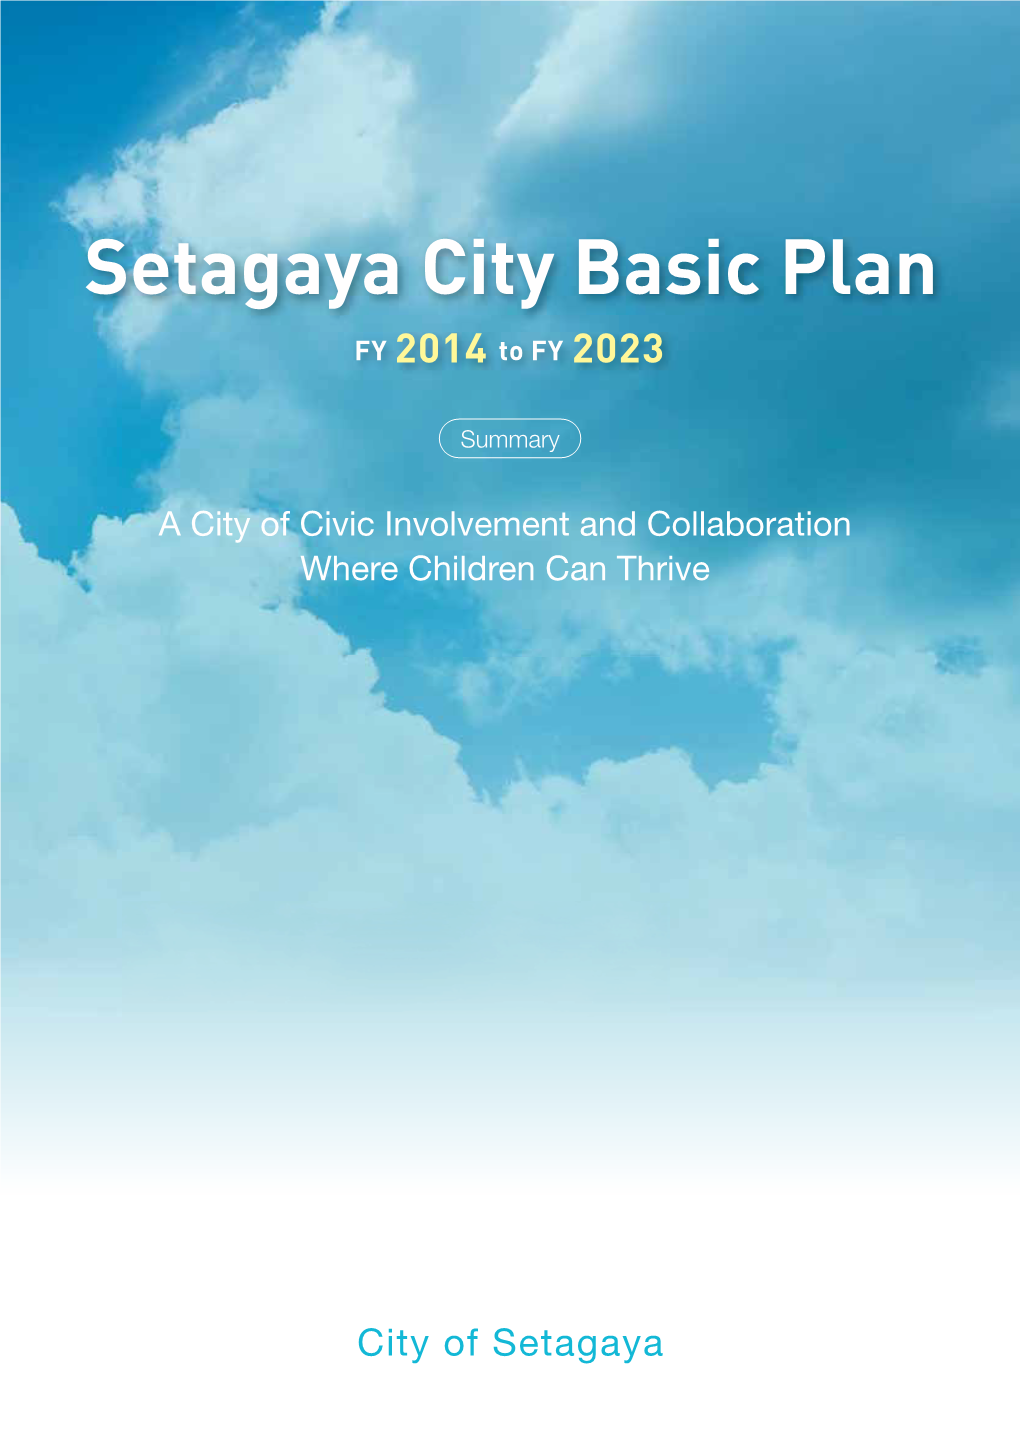 Setagaya City Basic Plan FY 2014 to FY 2023